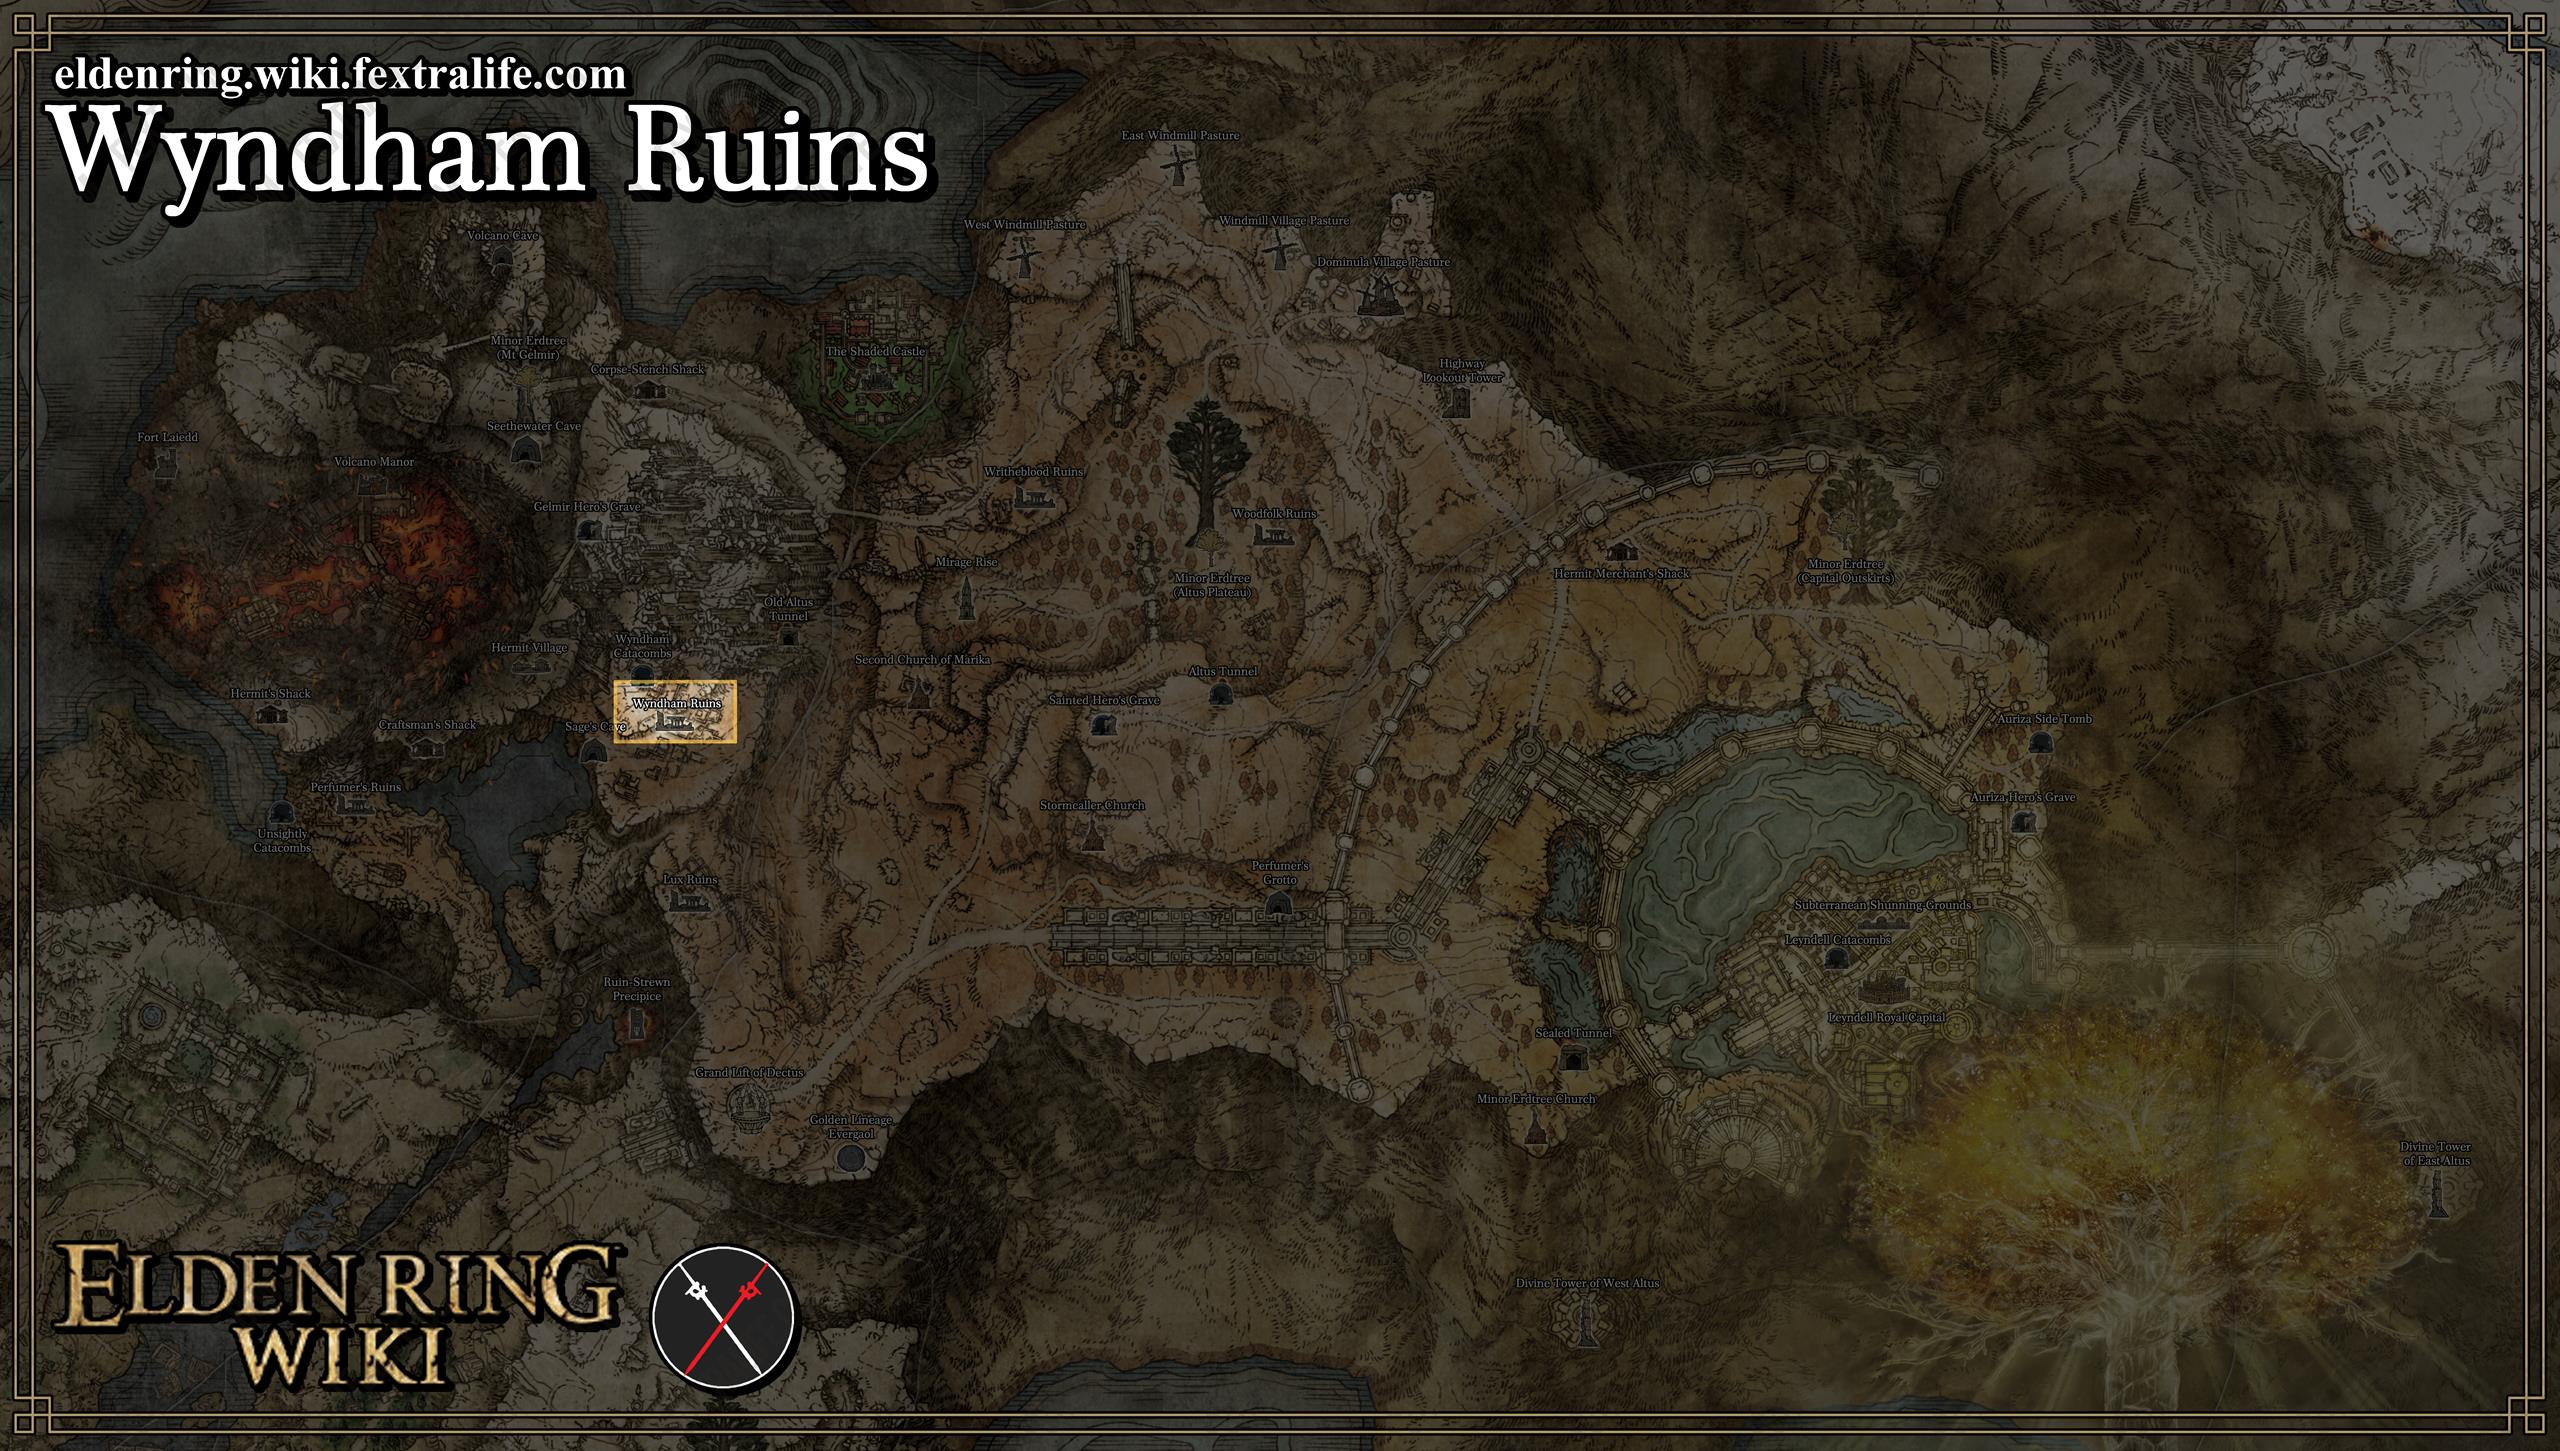 Elden Ring - Tibia's Summons Location (Sorcery) 